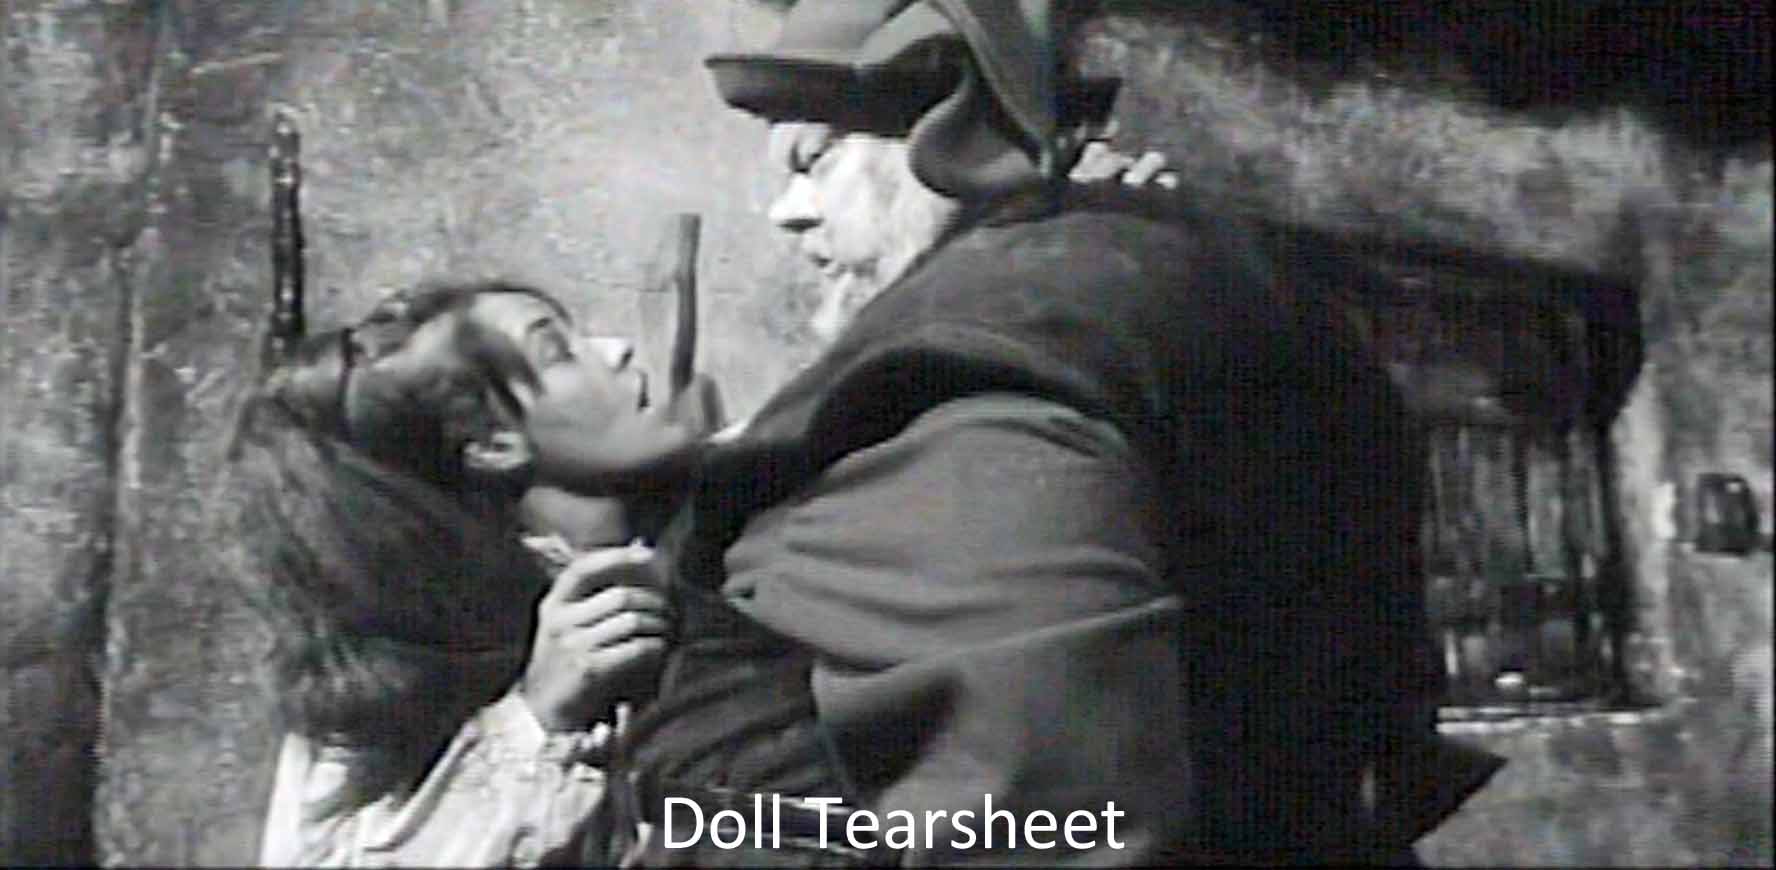 Doll Tearsheet